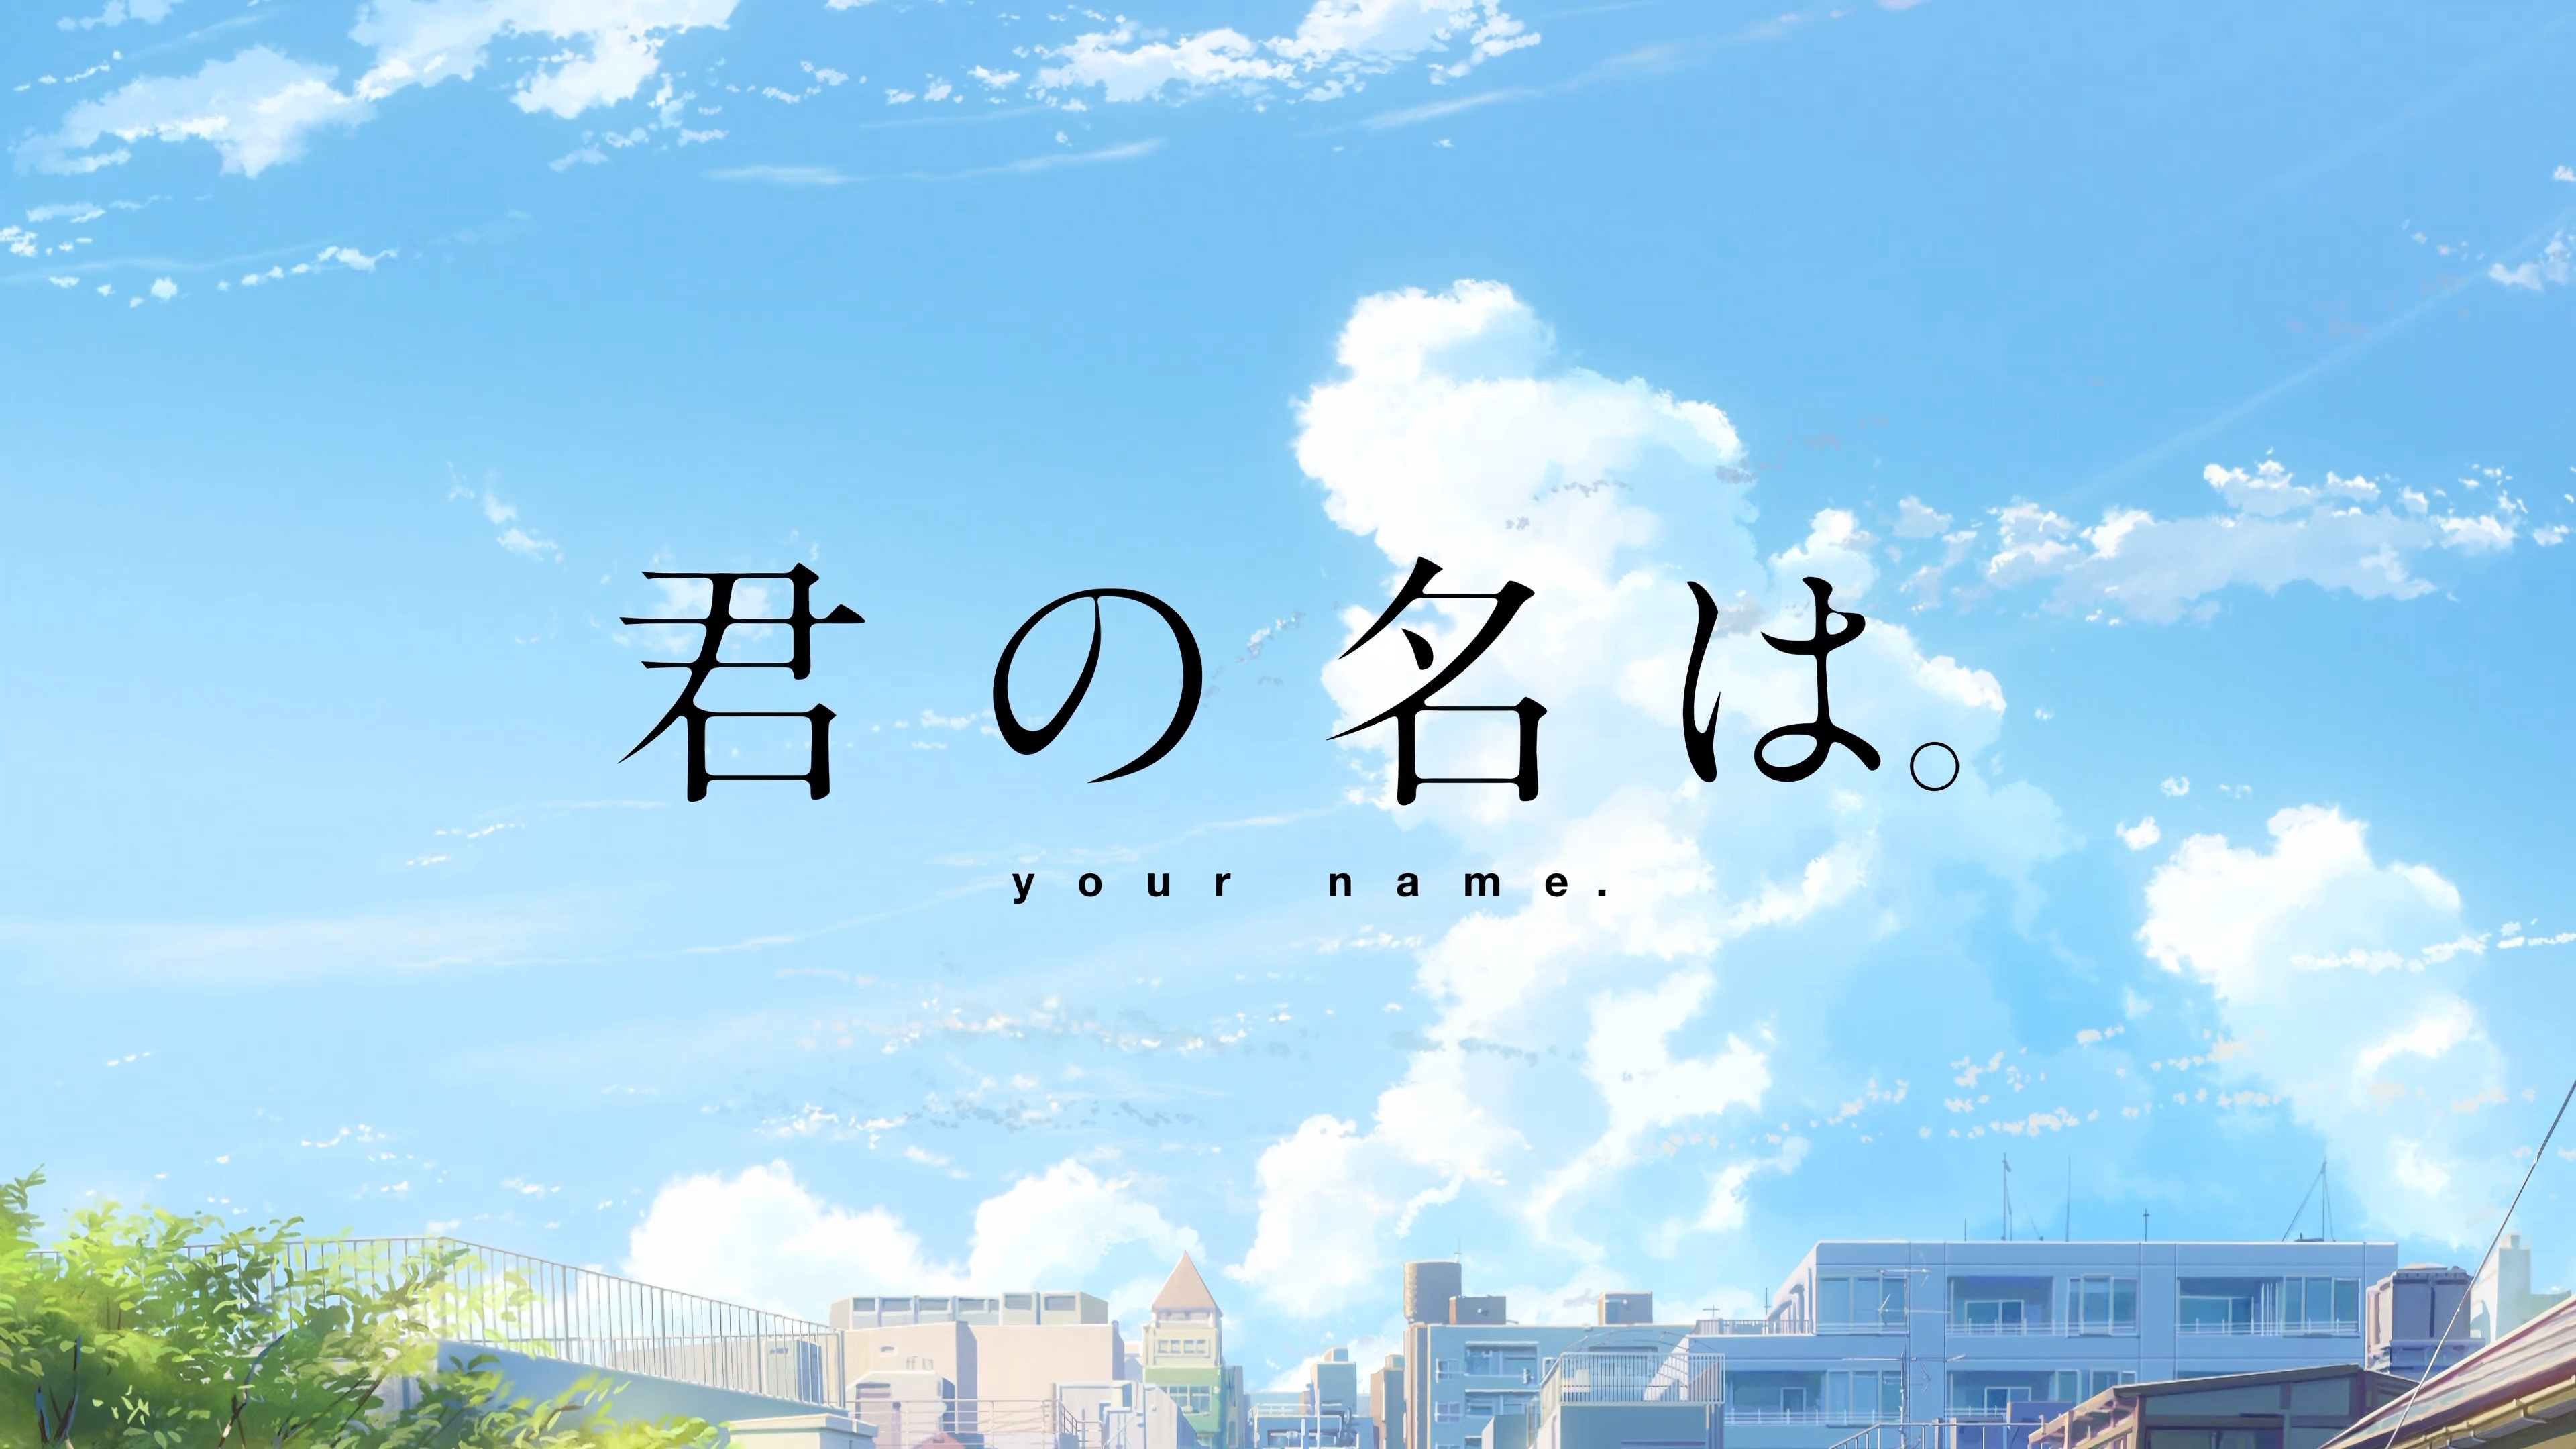 Anime 3840x2160 Makoto Shinkai  Kimi no Na Wa anime cityscape